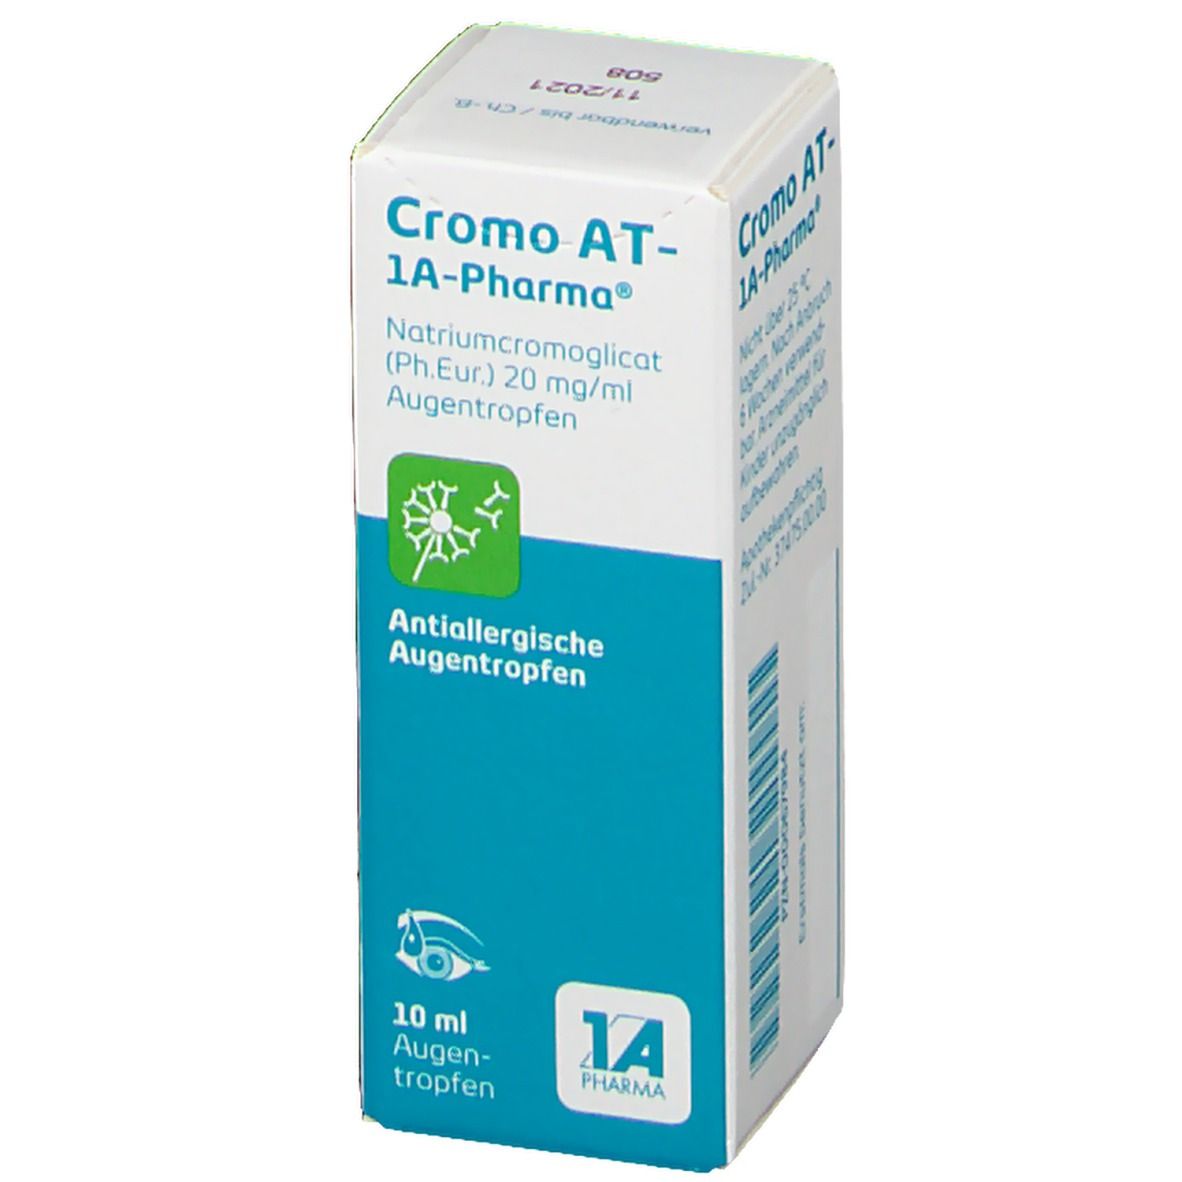 Cromo AT – 1A-Pharma®